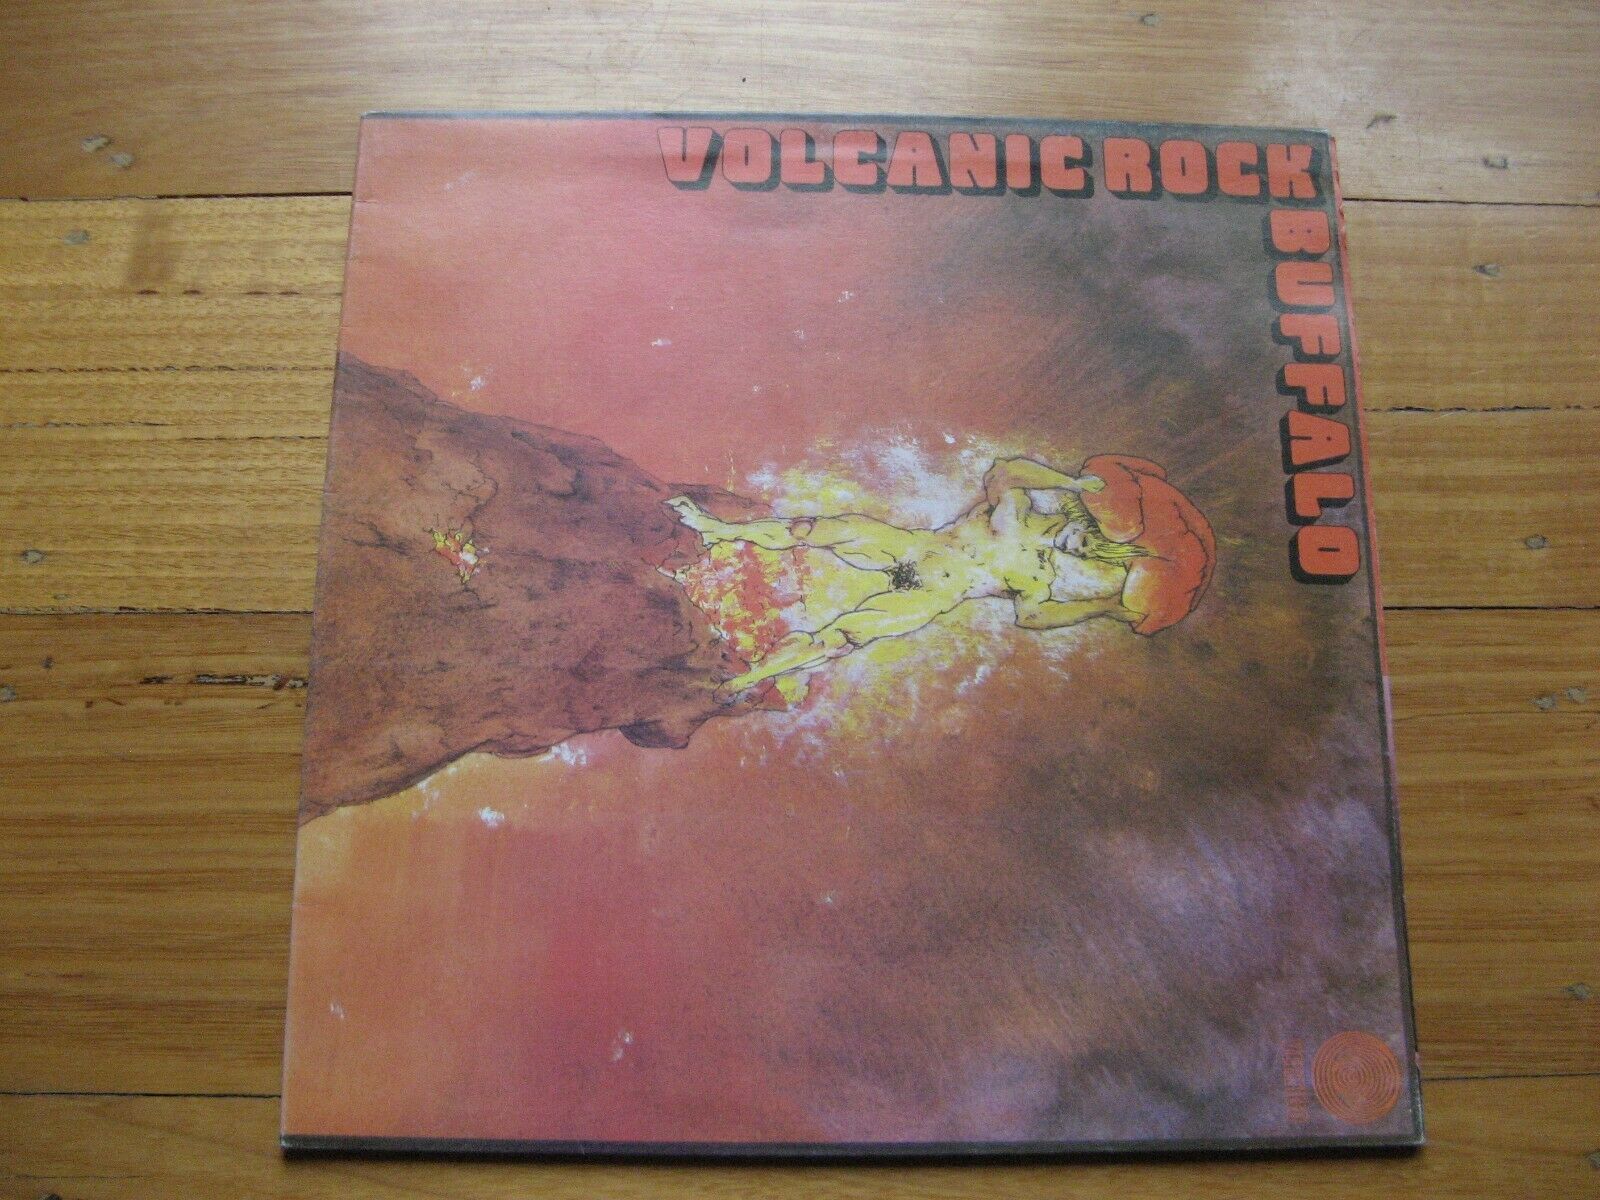 Pic 3 BUFFALO - Volcanic Rock LP - EX COND. 1ST OZ VERTIGO SWIRL + INSERT Prog / Psych